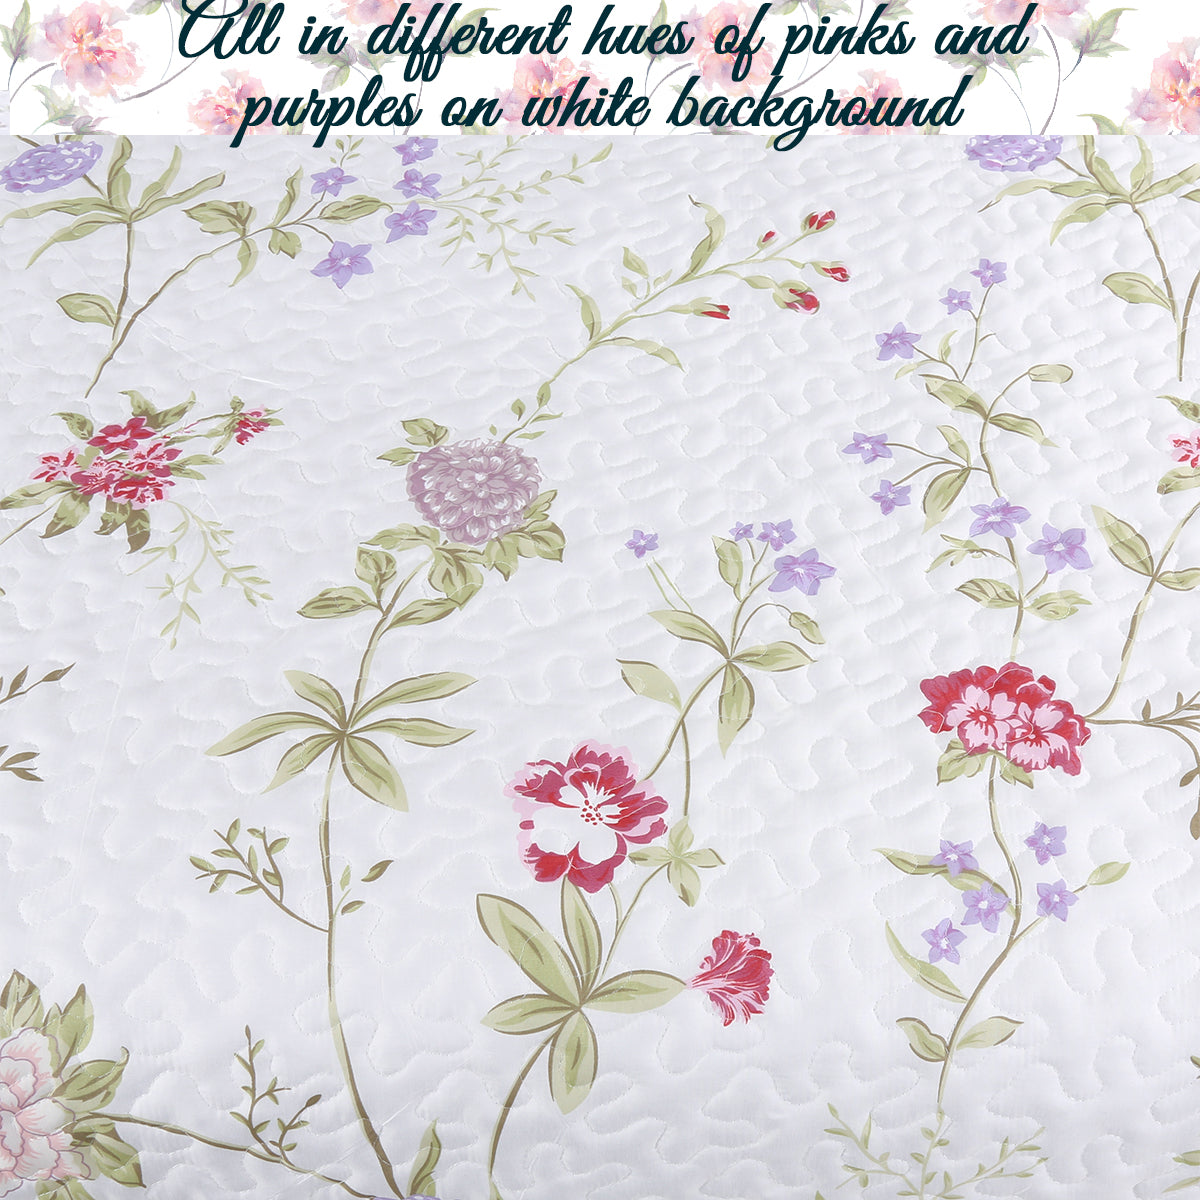 Lucie Light Pink Lavender Floral 3-Piece Reversible Quilt Bedding